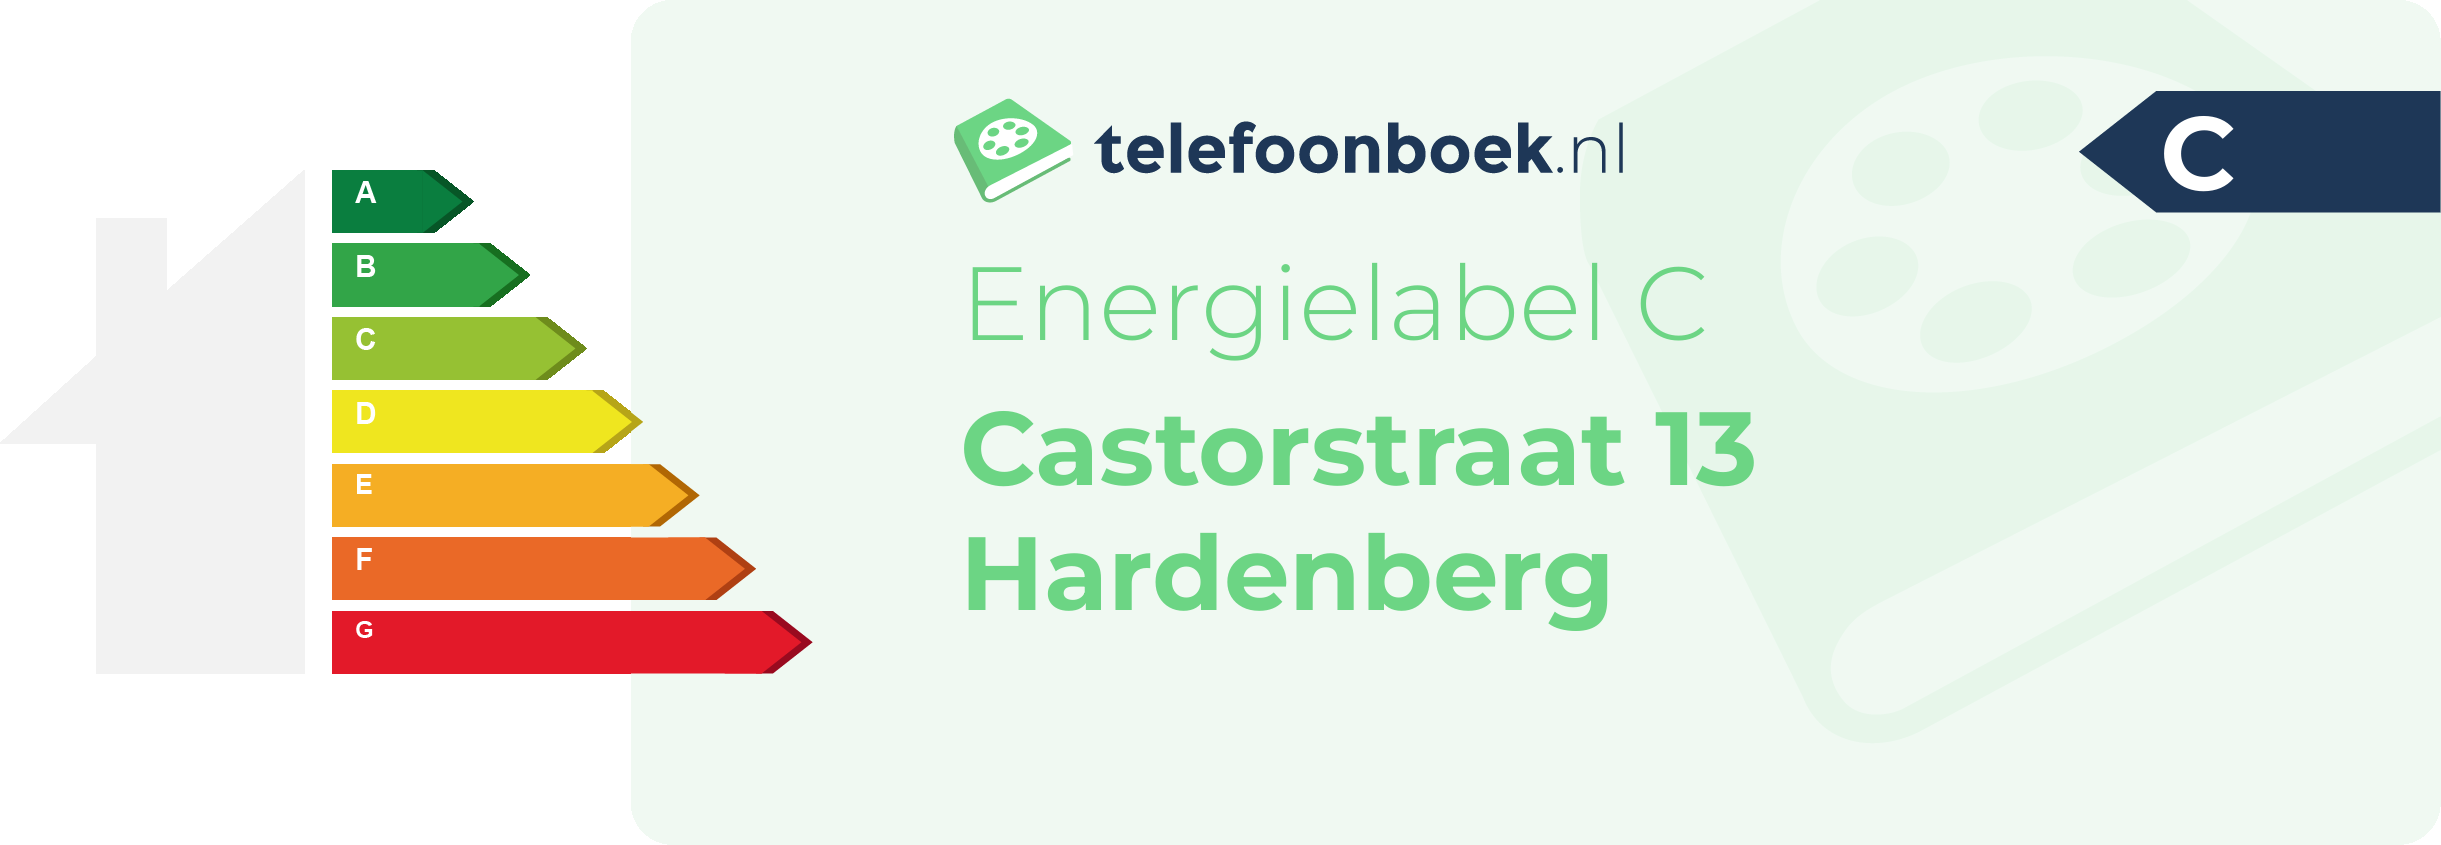 Energielabel Castorstraat 13 Hardenberg